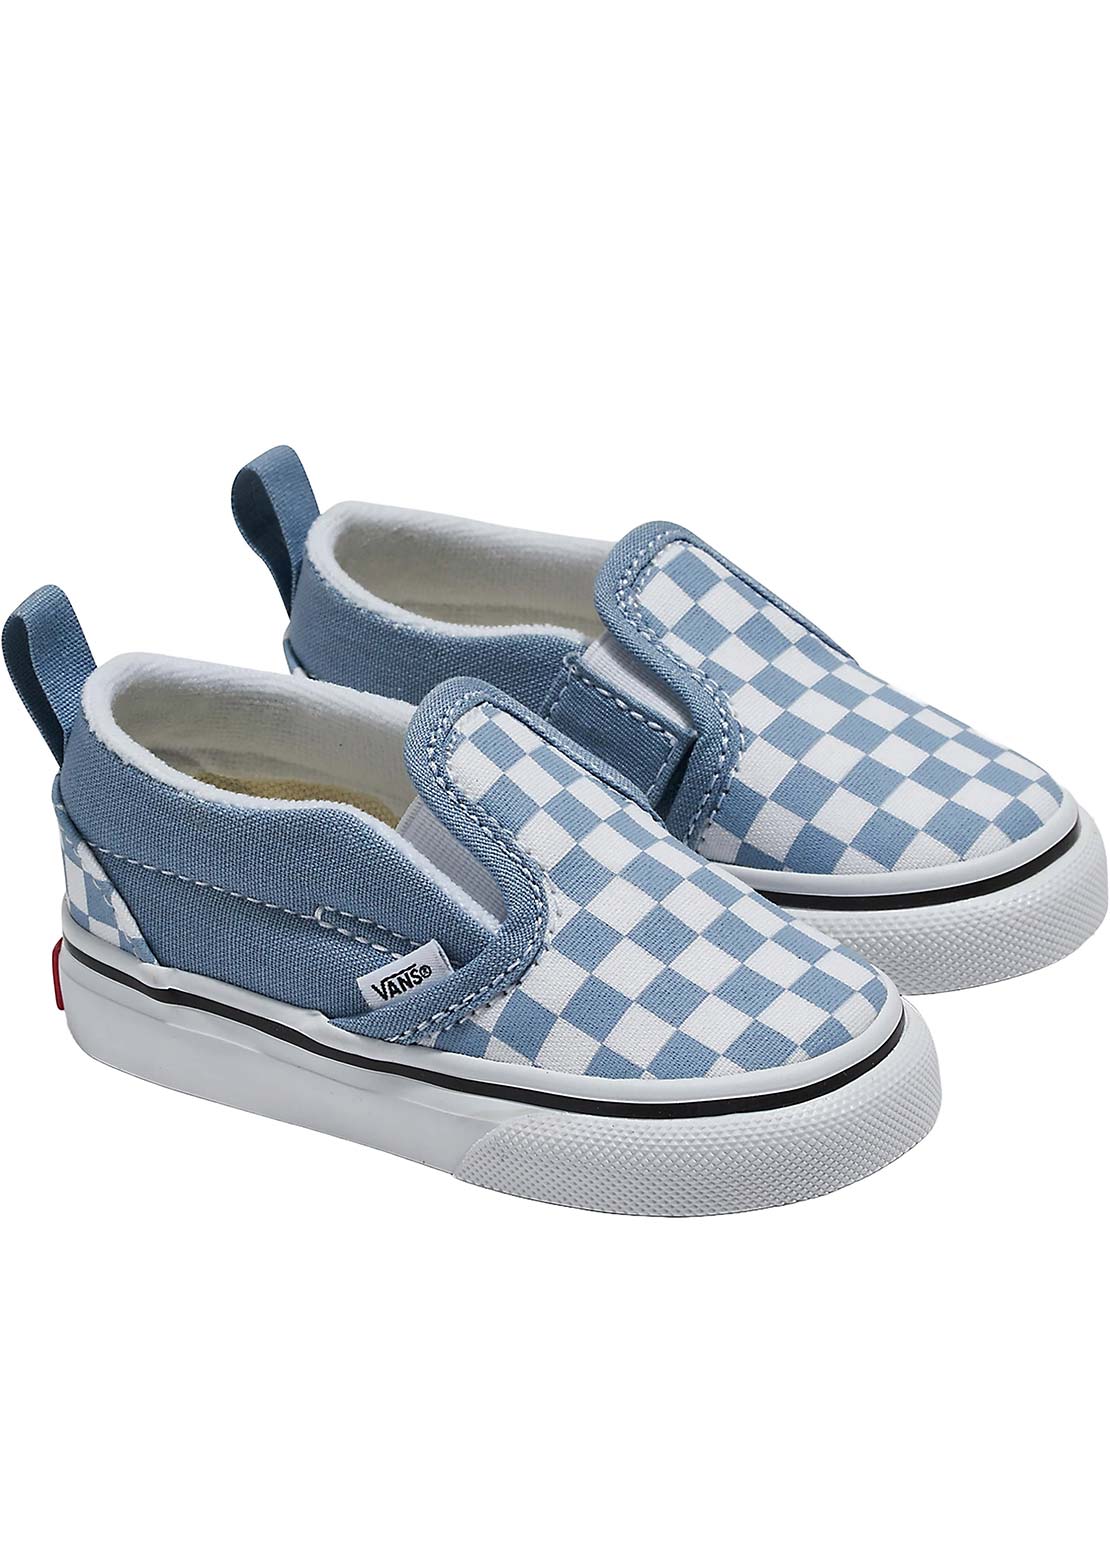 Vans Toddler Slip-on V Shoes Dusty Blue